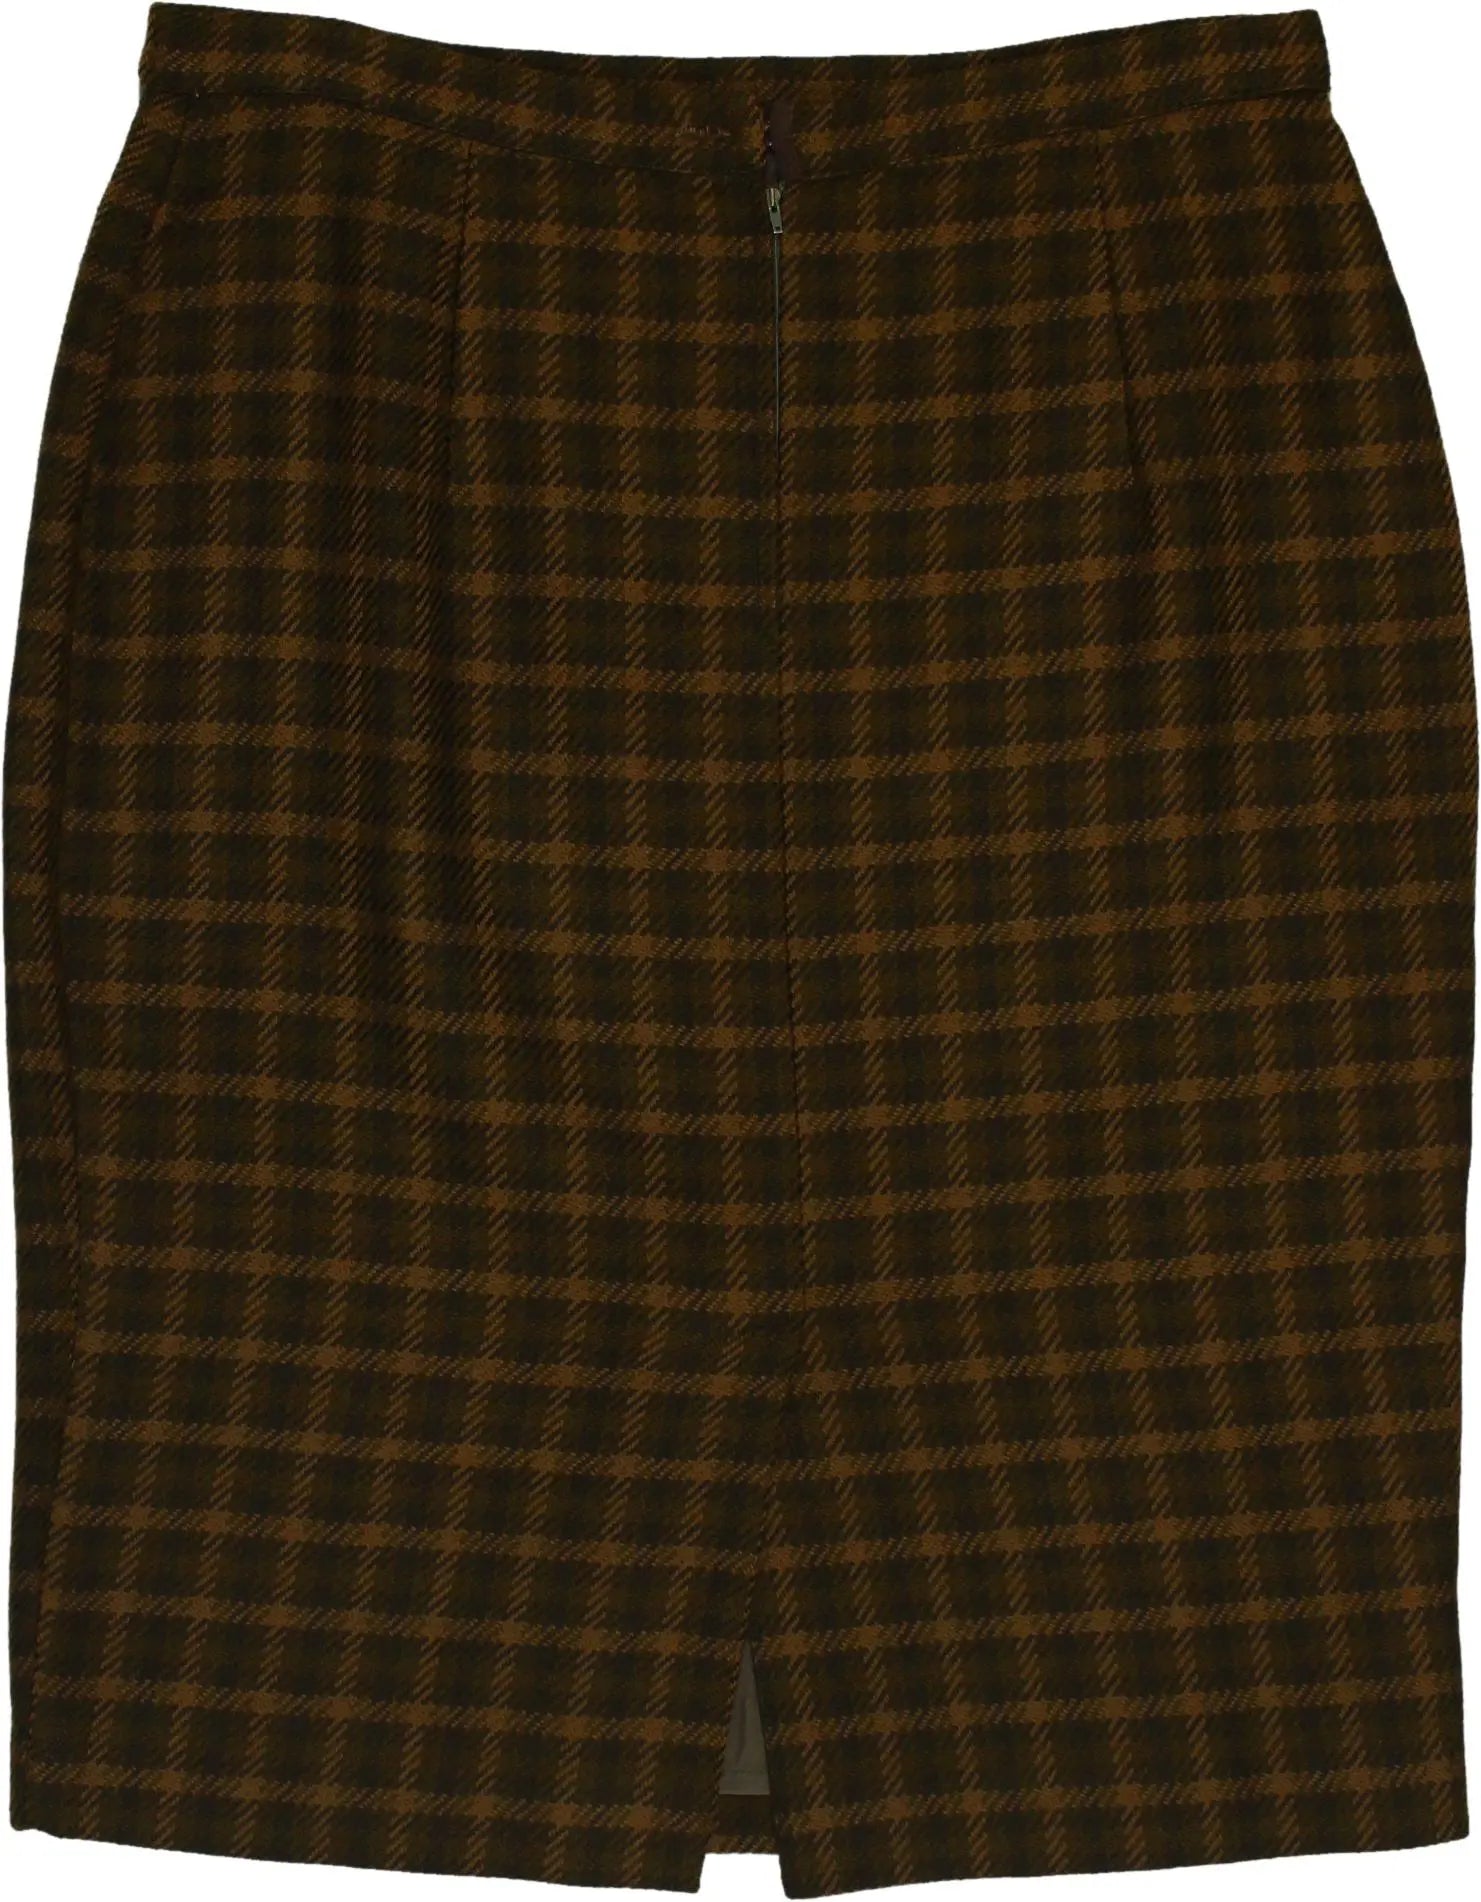 Handmade - Handmade Tartan Skirt- ThriftTale.com - Vintage and second handclothing